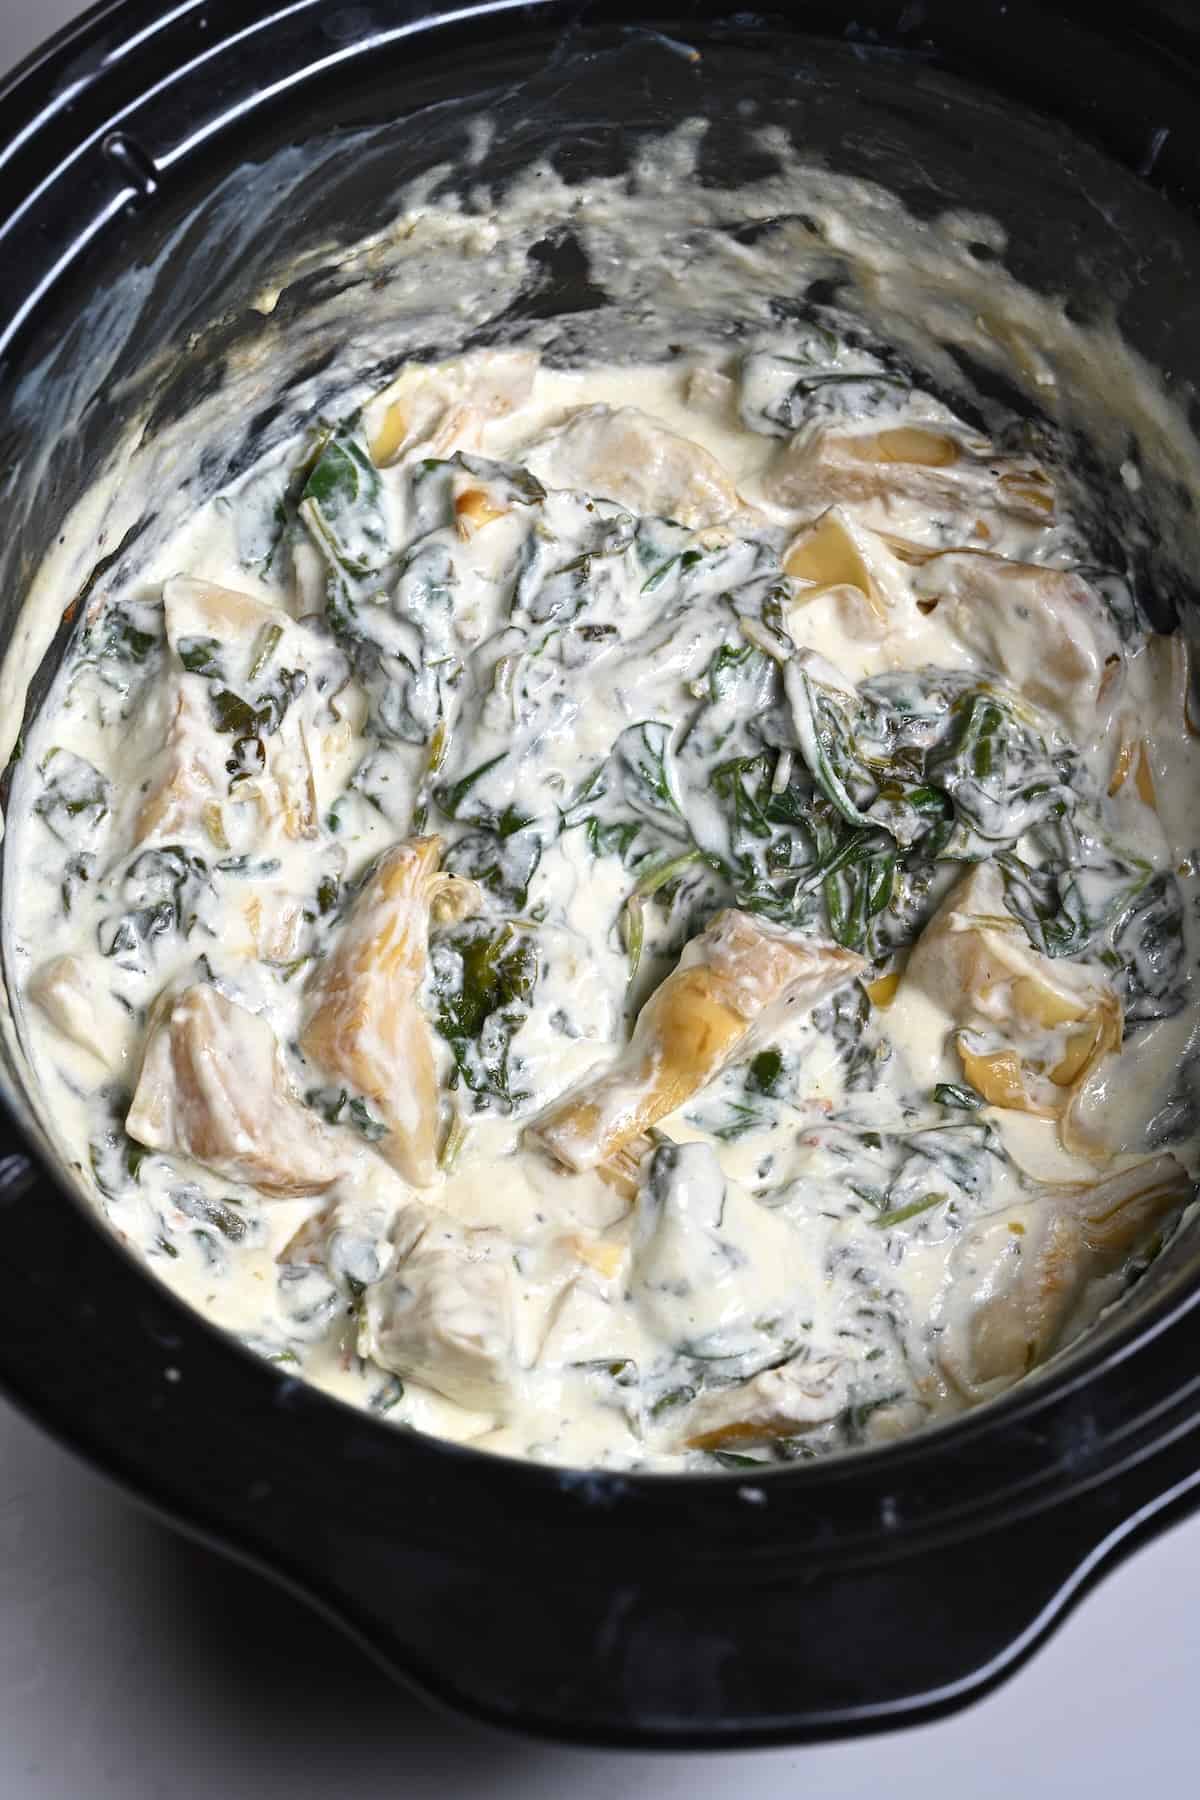 Artichoke and spinach dip made in a crockpot